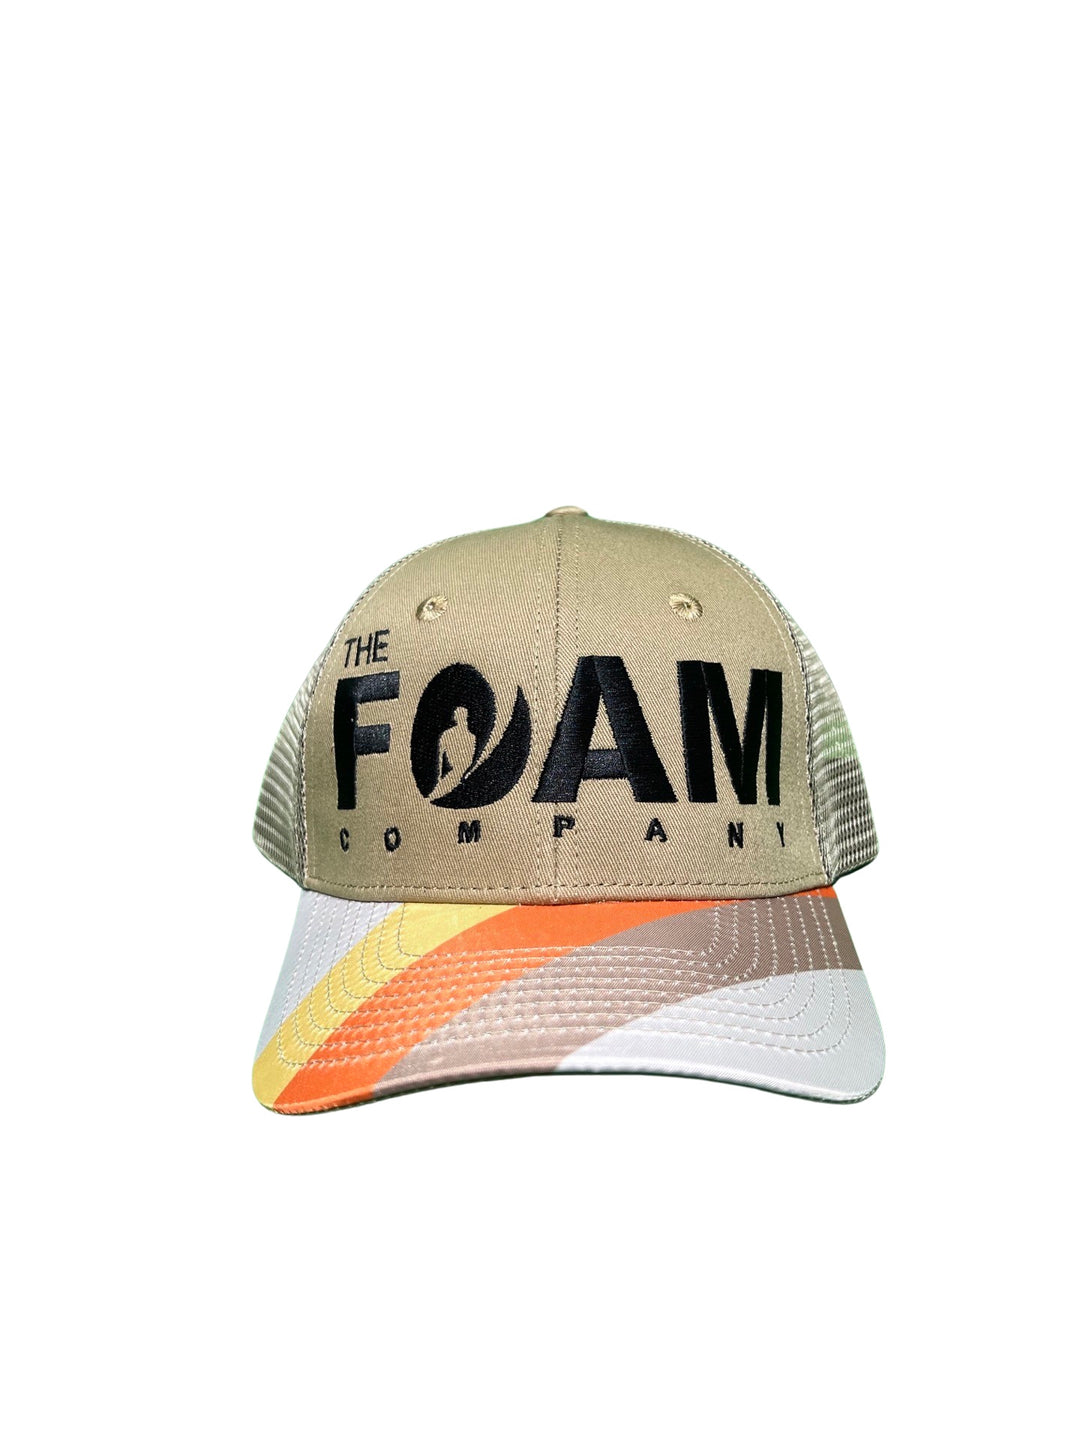 Foam Co Hat No Box Logo SnapBack